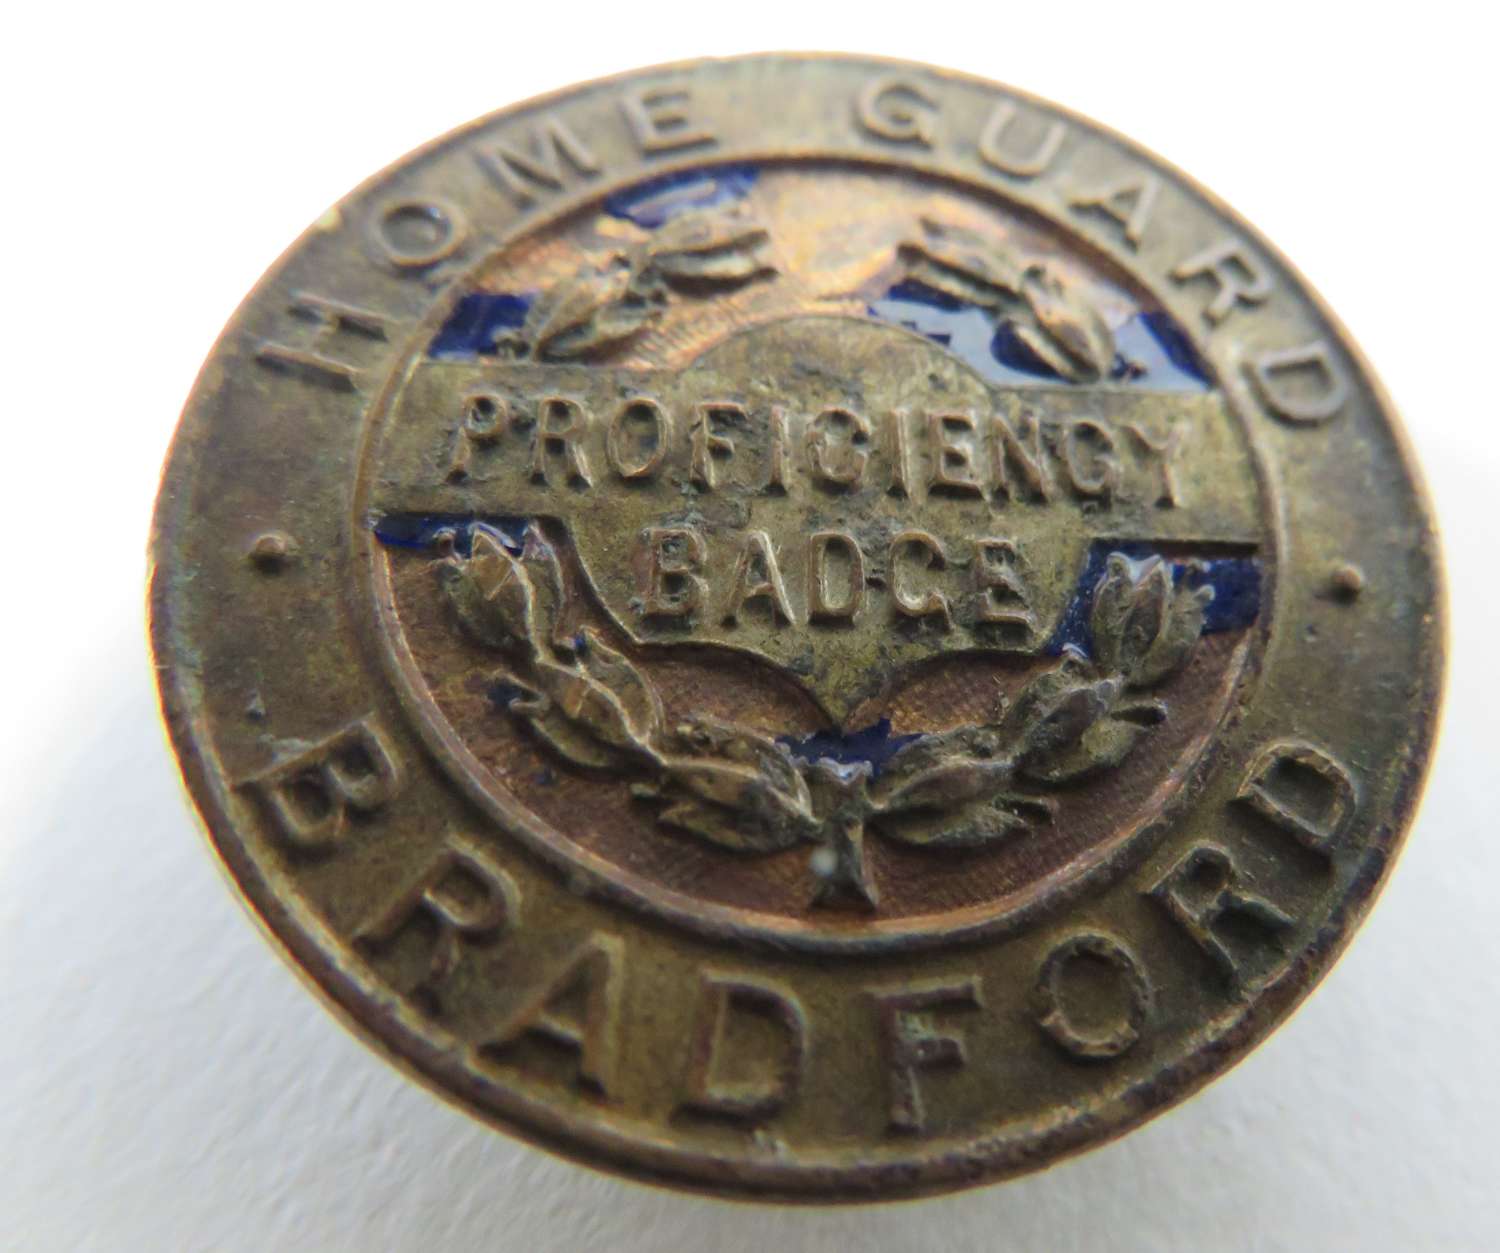 Bradford Home Guard Proficiency Badge